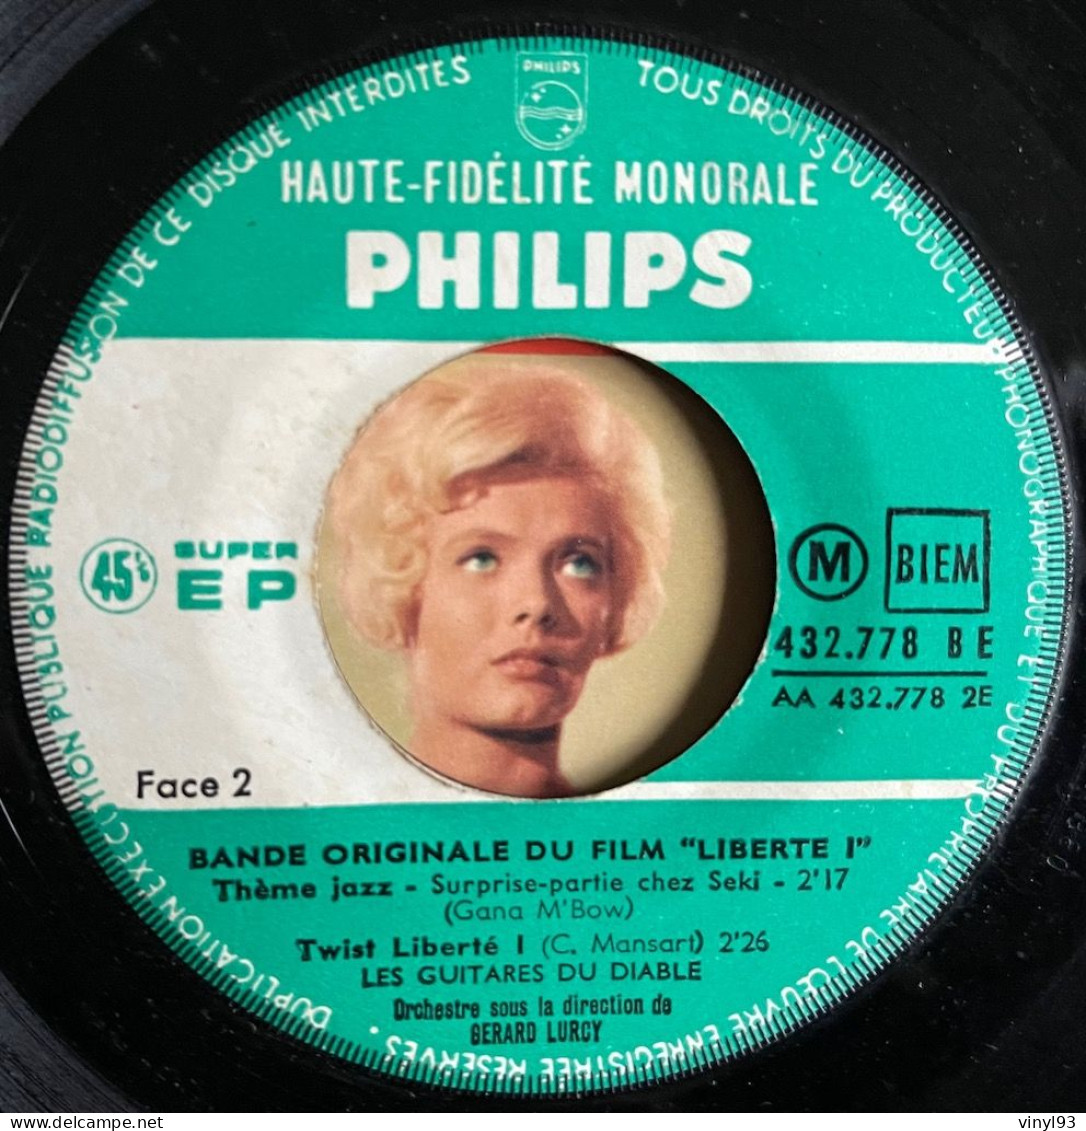 1961 - EP 45T B.O Film "Liberté 1" - Musique C.Mansart & G.M'Bow Avec Corinne Marchand - Philips 432 778 - Filmmuziek